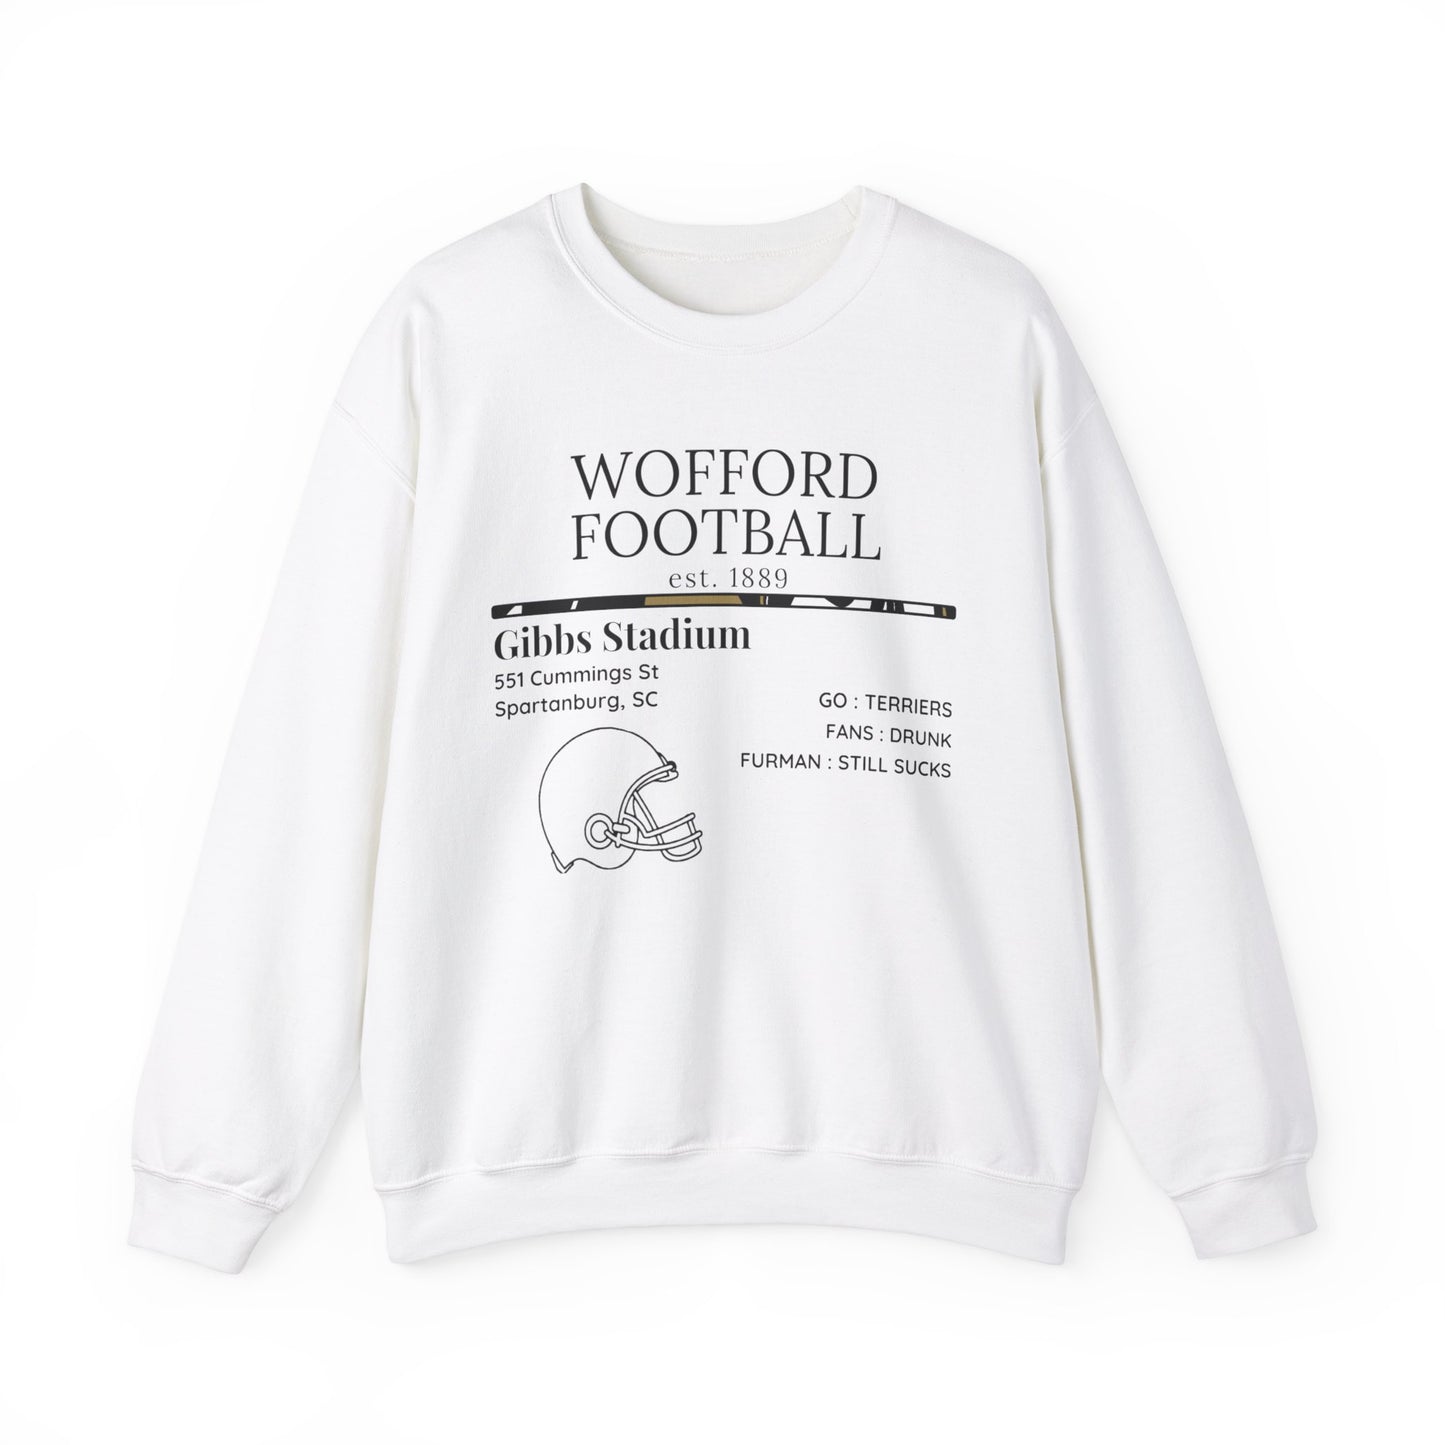 Wofford Football Sweatshirt